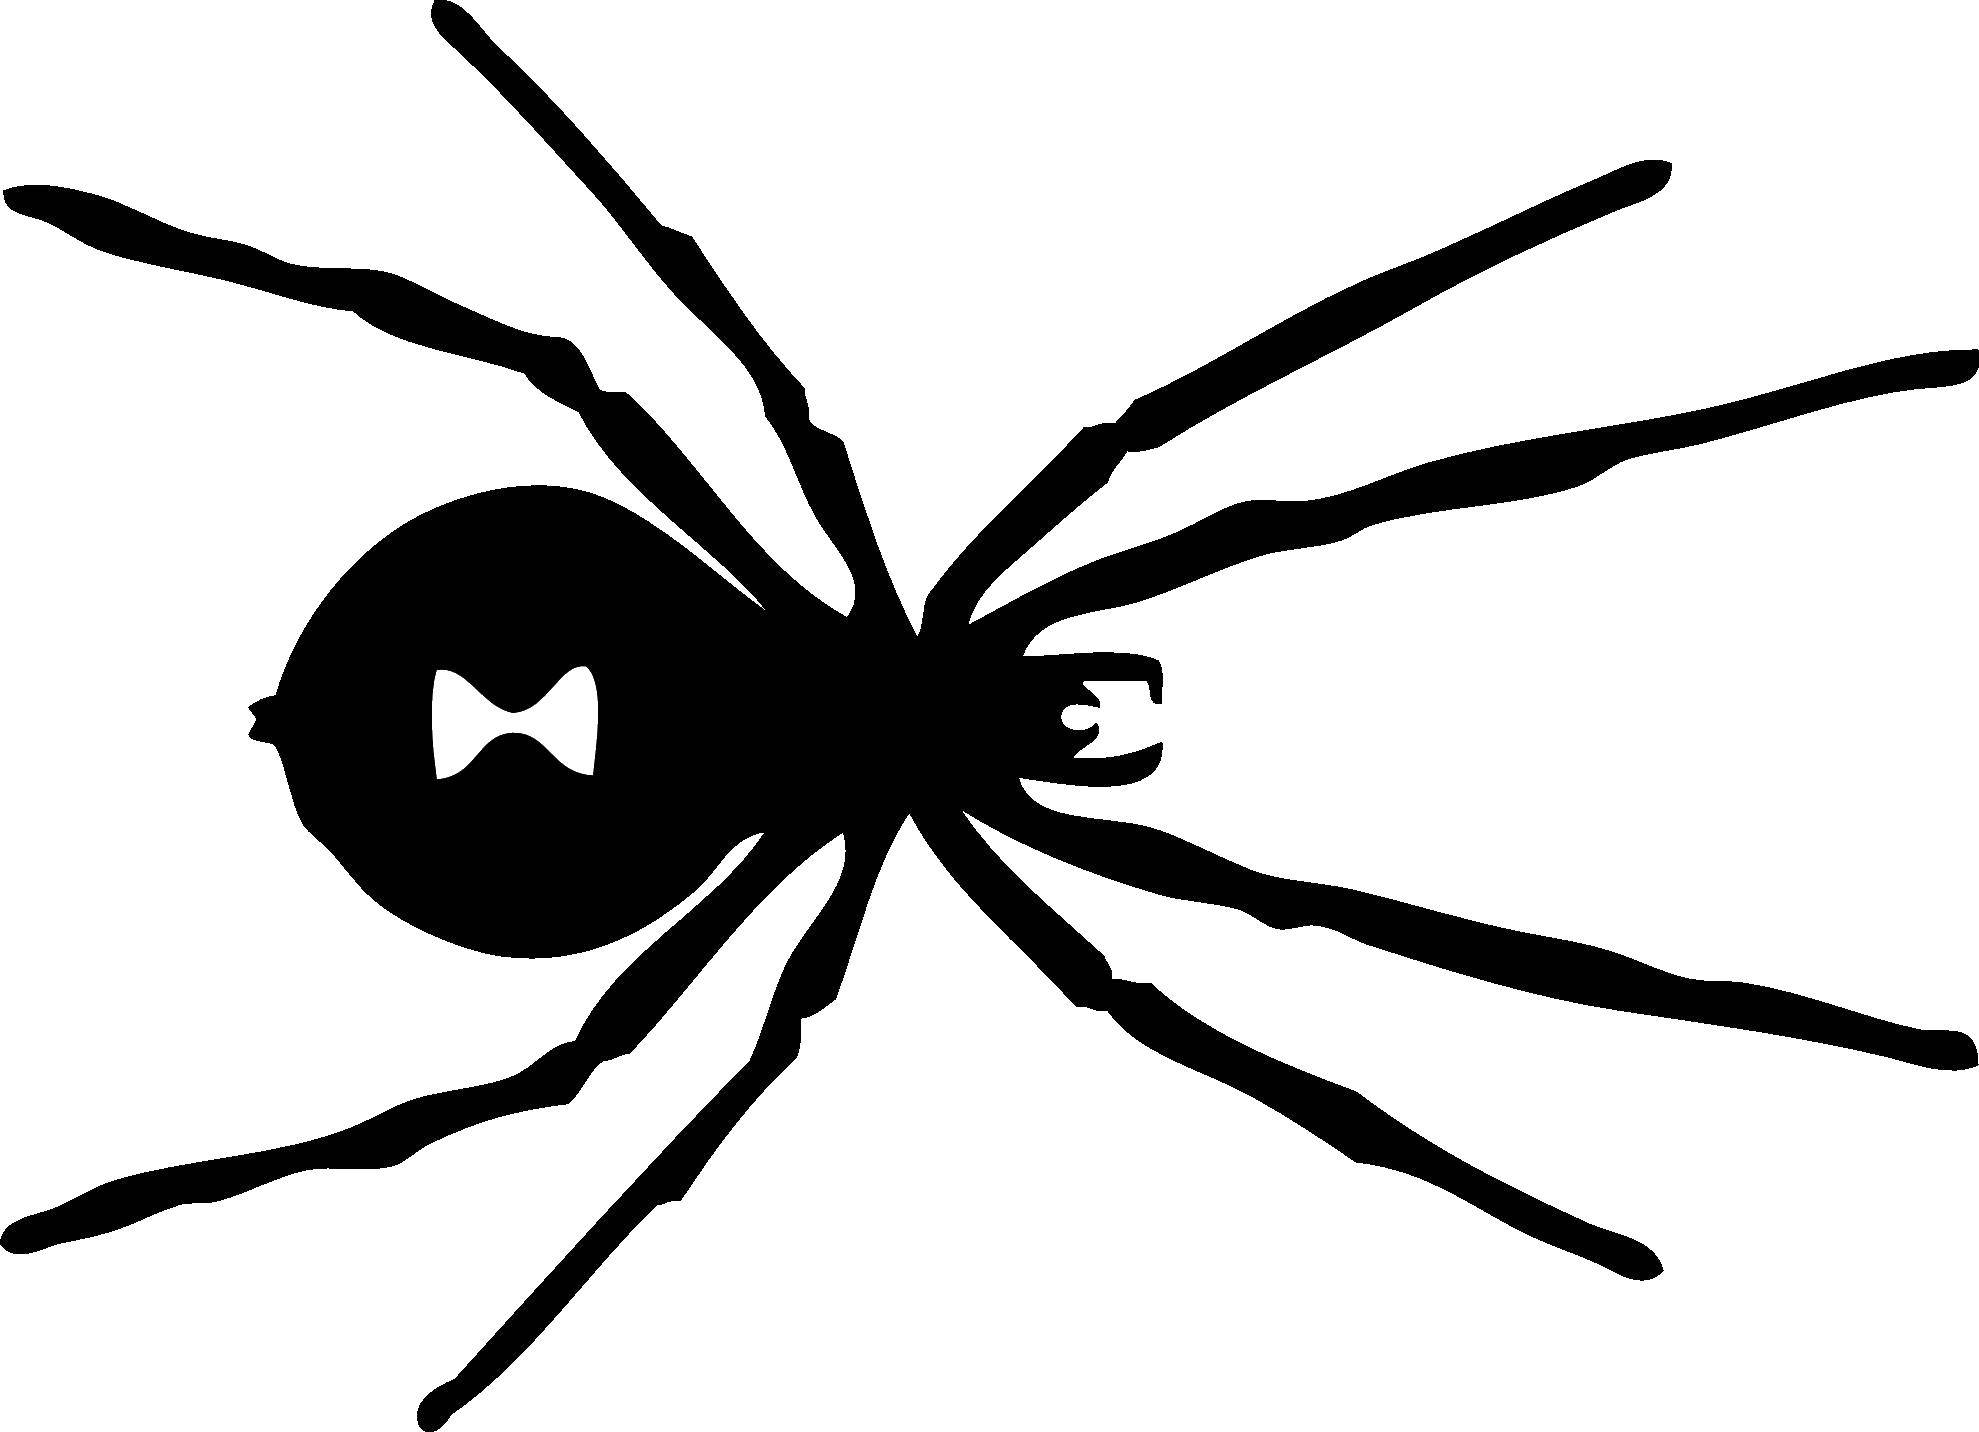 Название: Раскраска Контур паука. Категория: Контур паук. Теги: контуры, шаблоны, пауки.